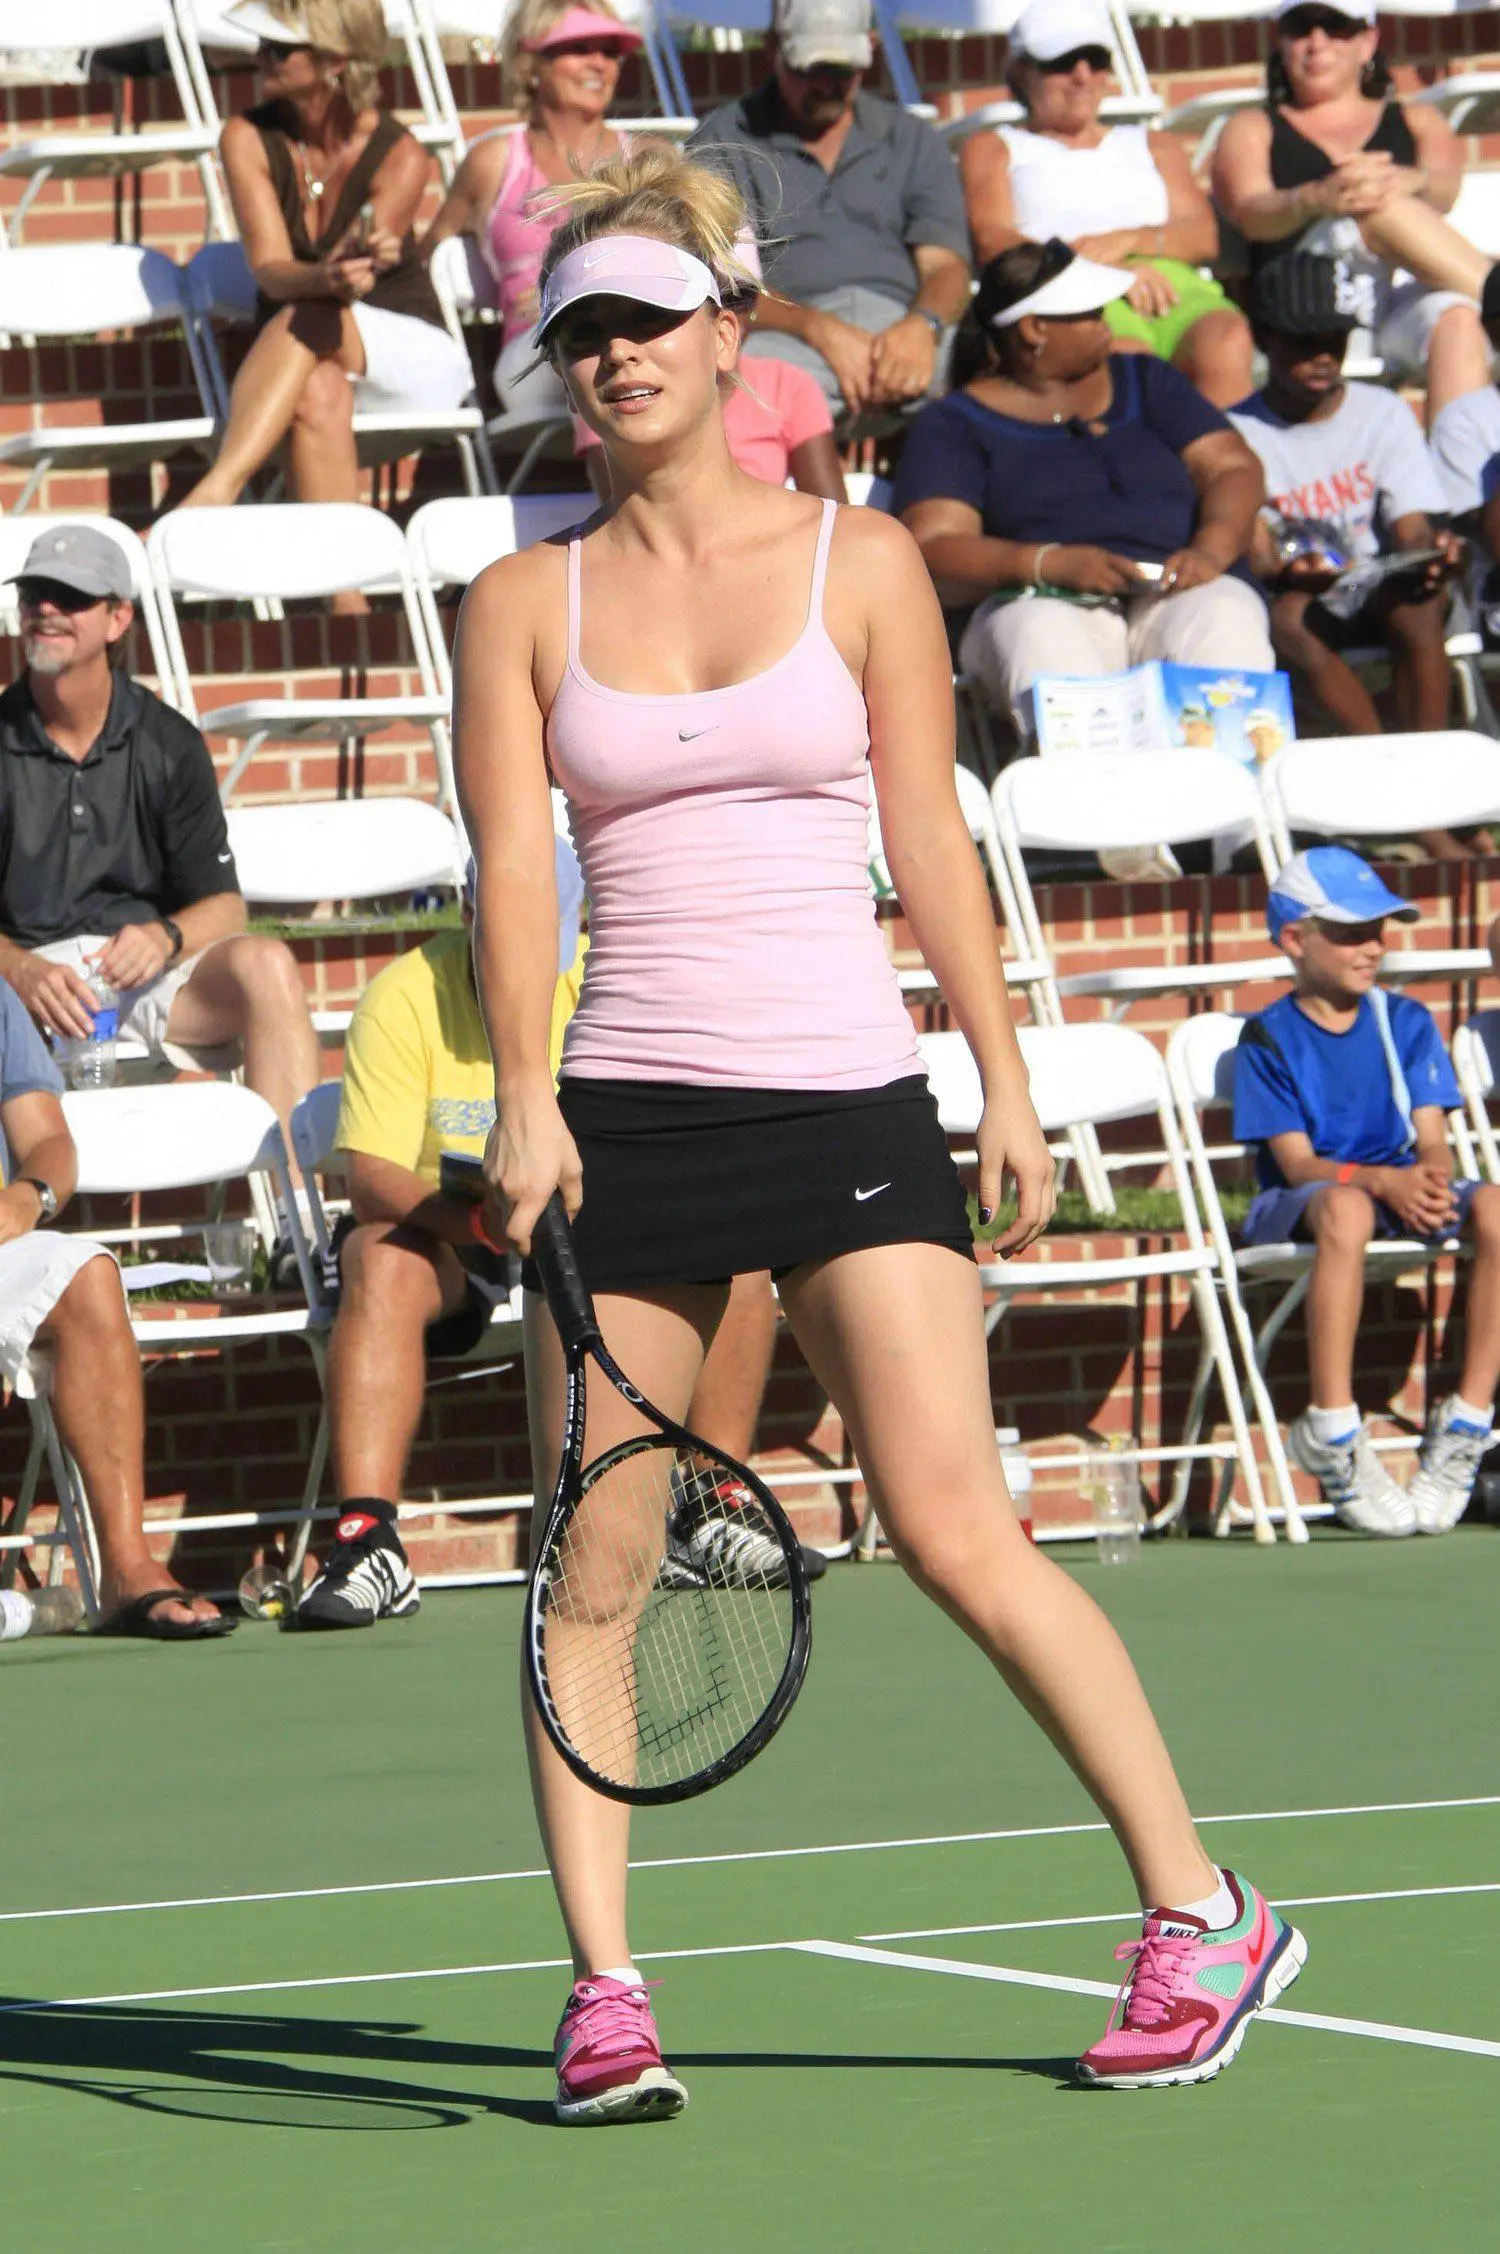 Kaley Cuoco - Playing Tennis @ Bryan Bros event 2008.jpg